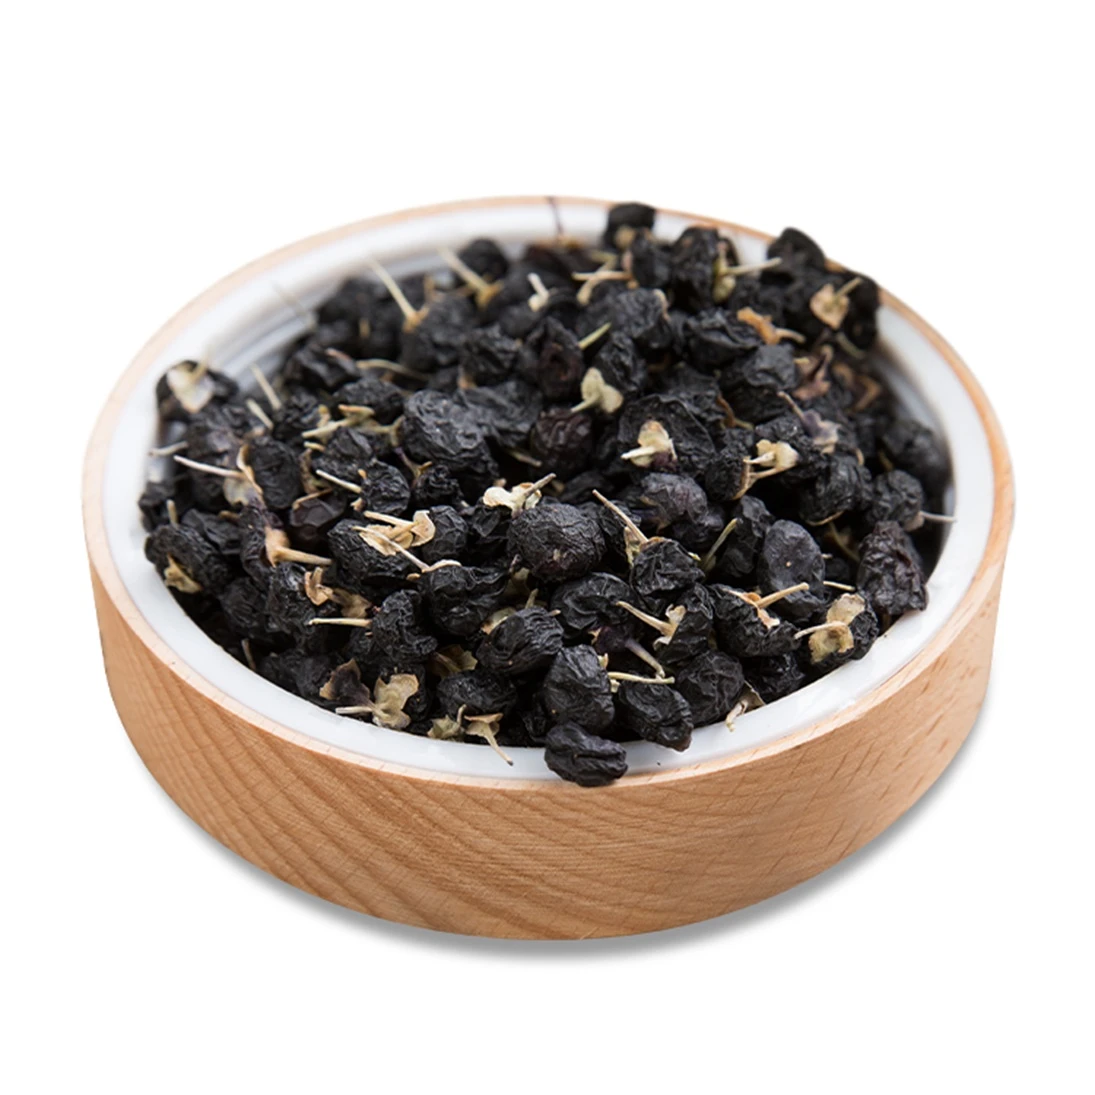 100% Qinghai-Tibetan Plateau Origin NOP Certified Organic Dried Fruits Black Goji Berry